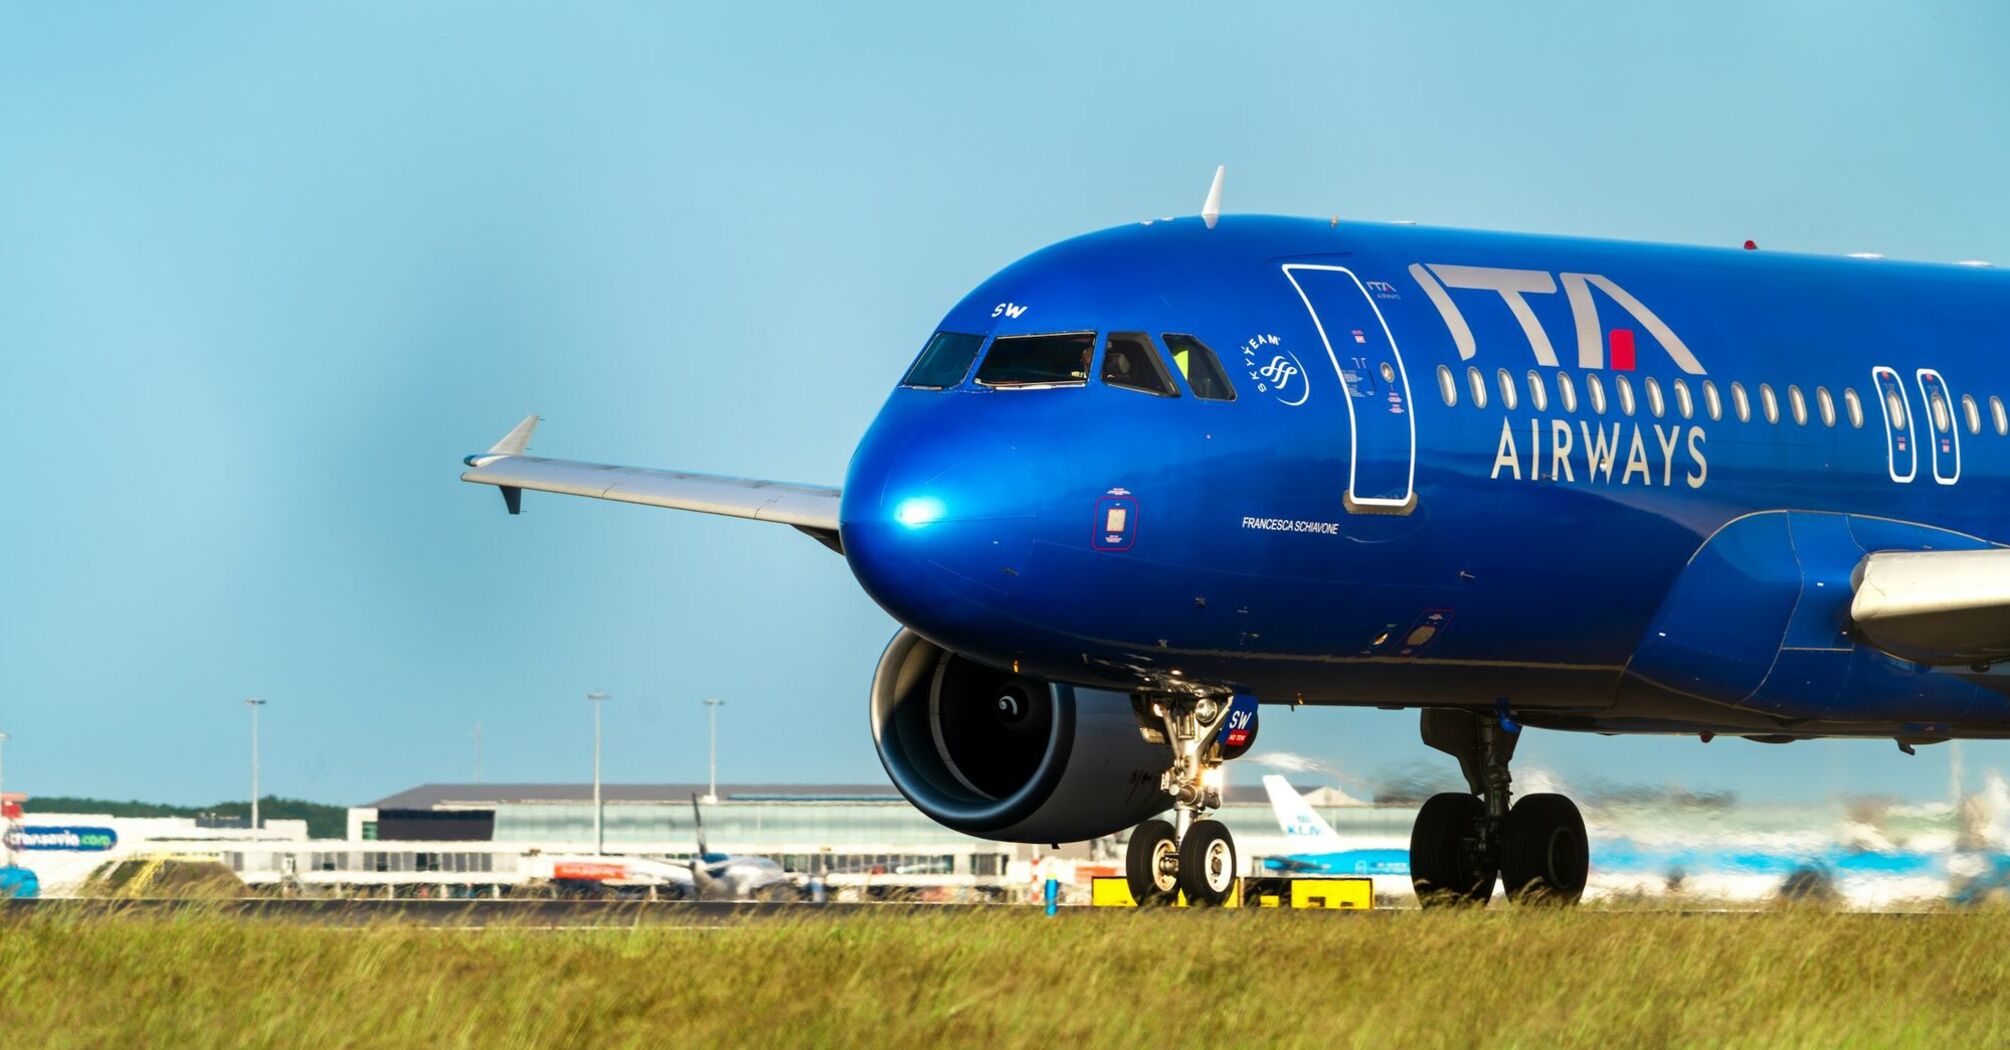 ITA Airways blue airplane taxiing on runway at airport